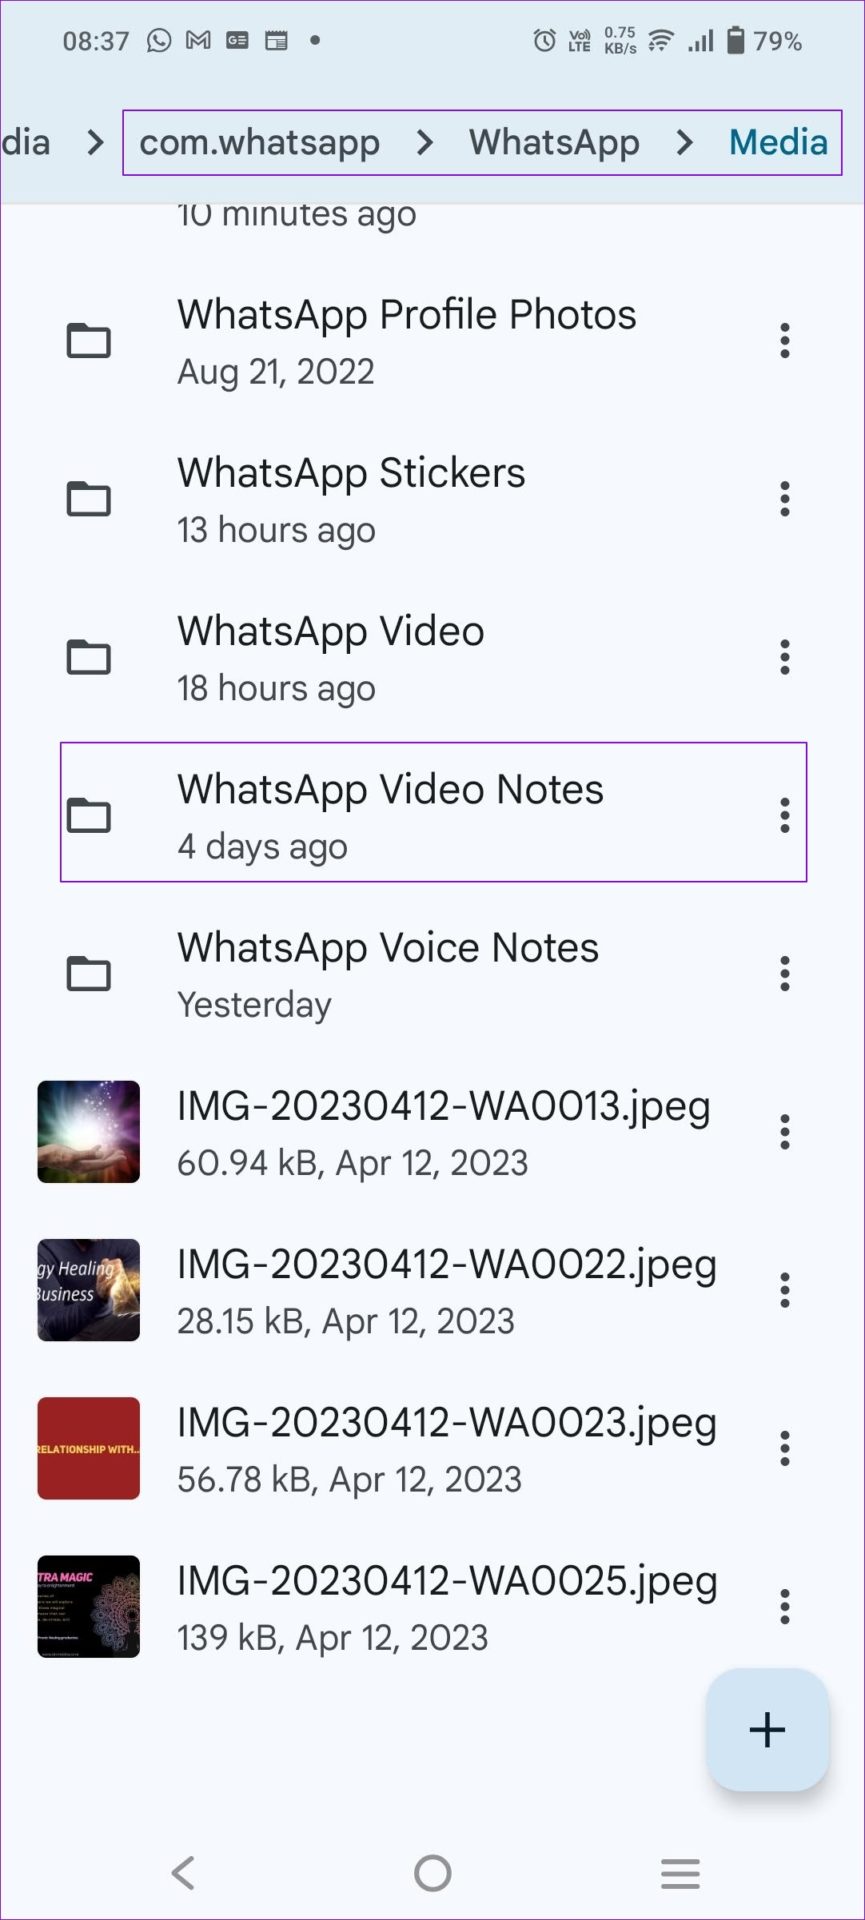 Whatsapp video notes folder